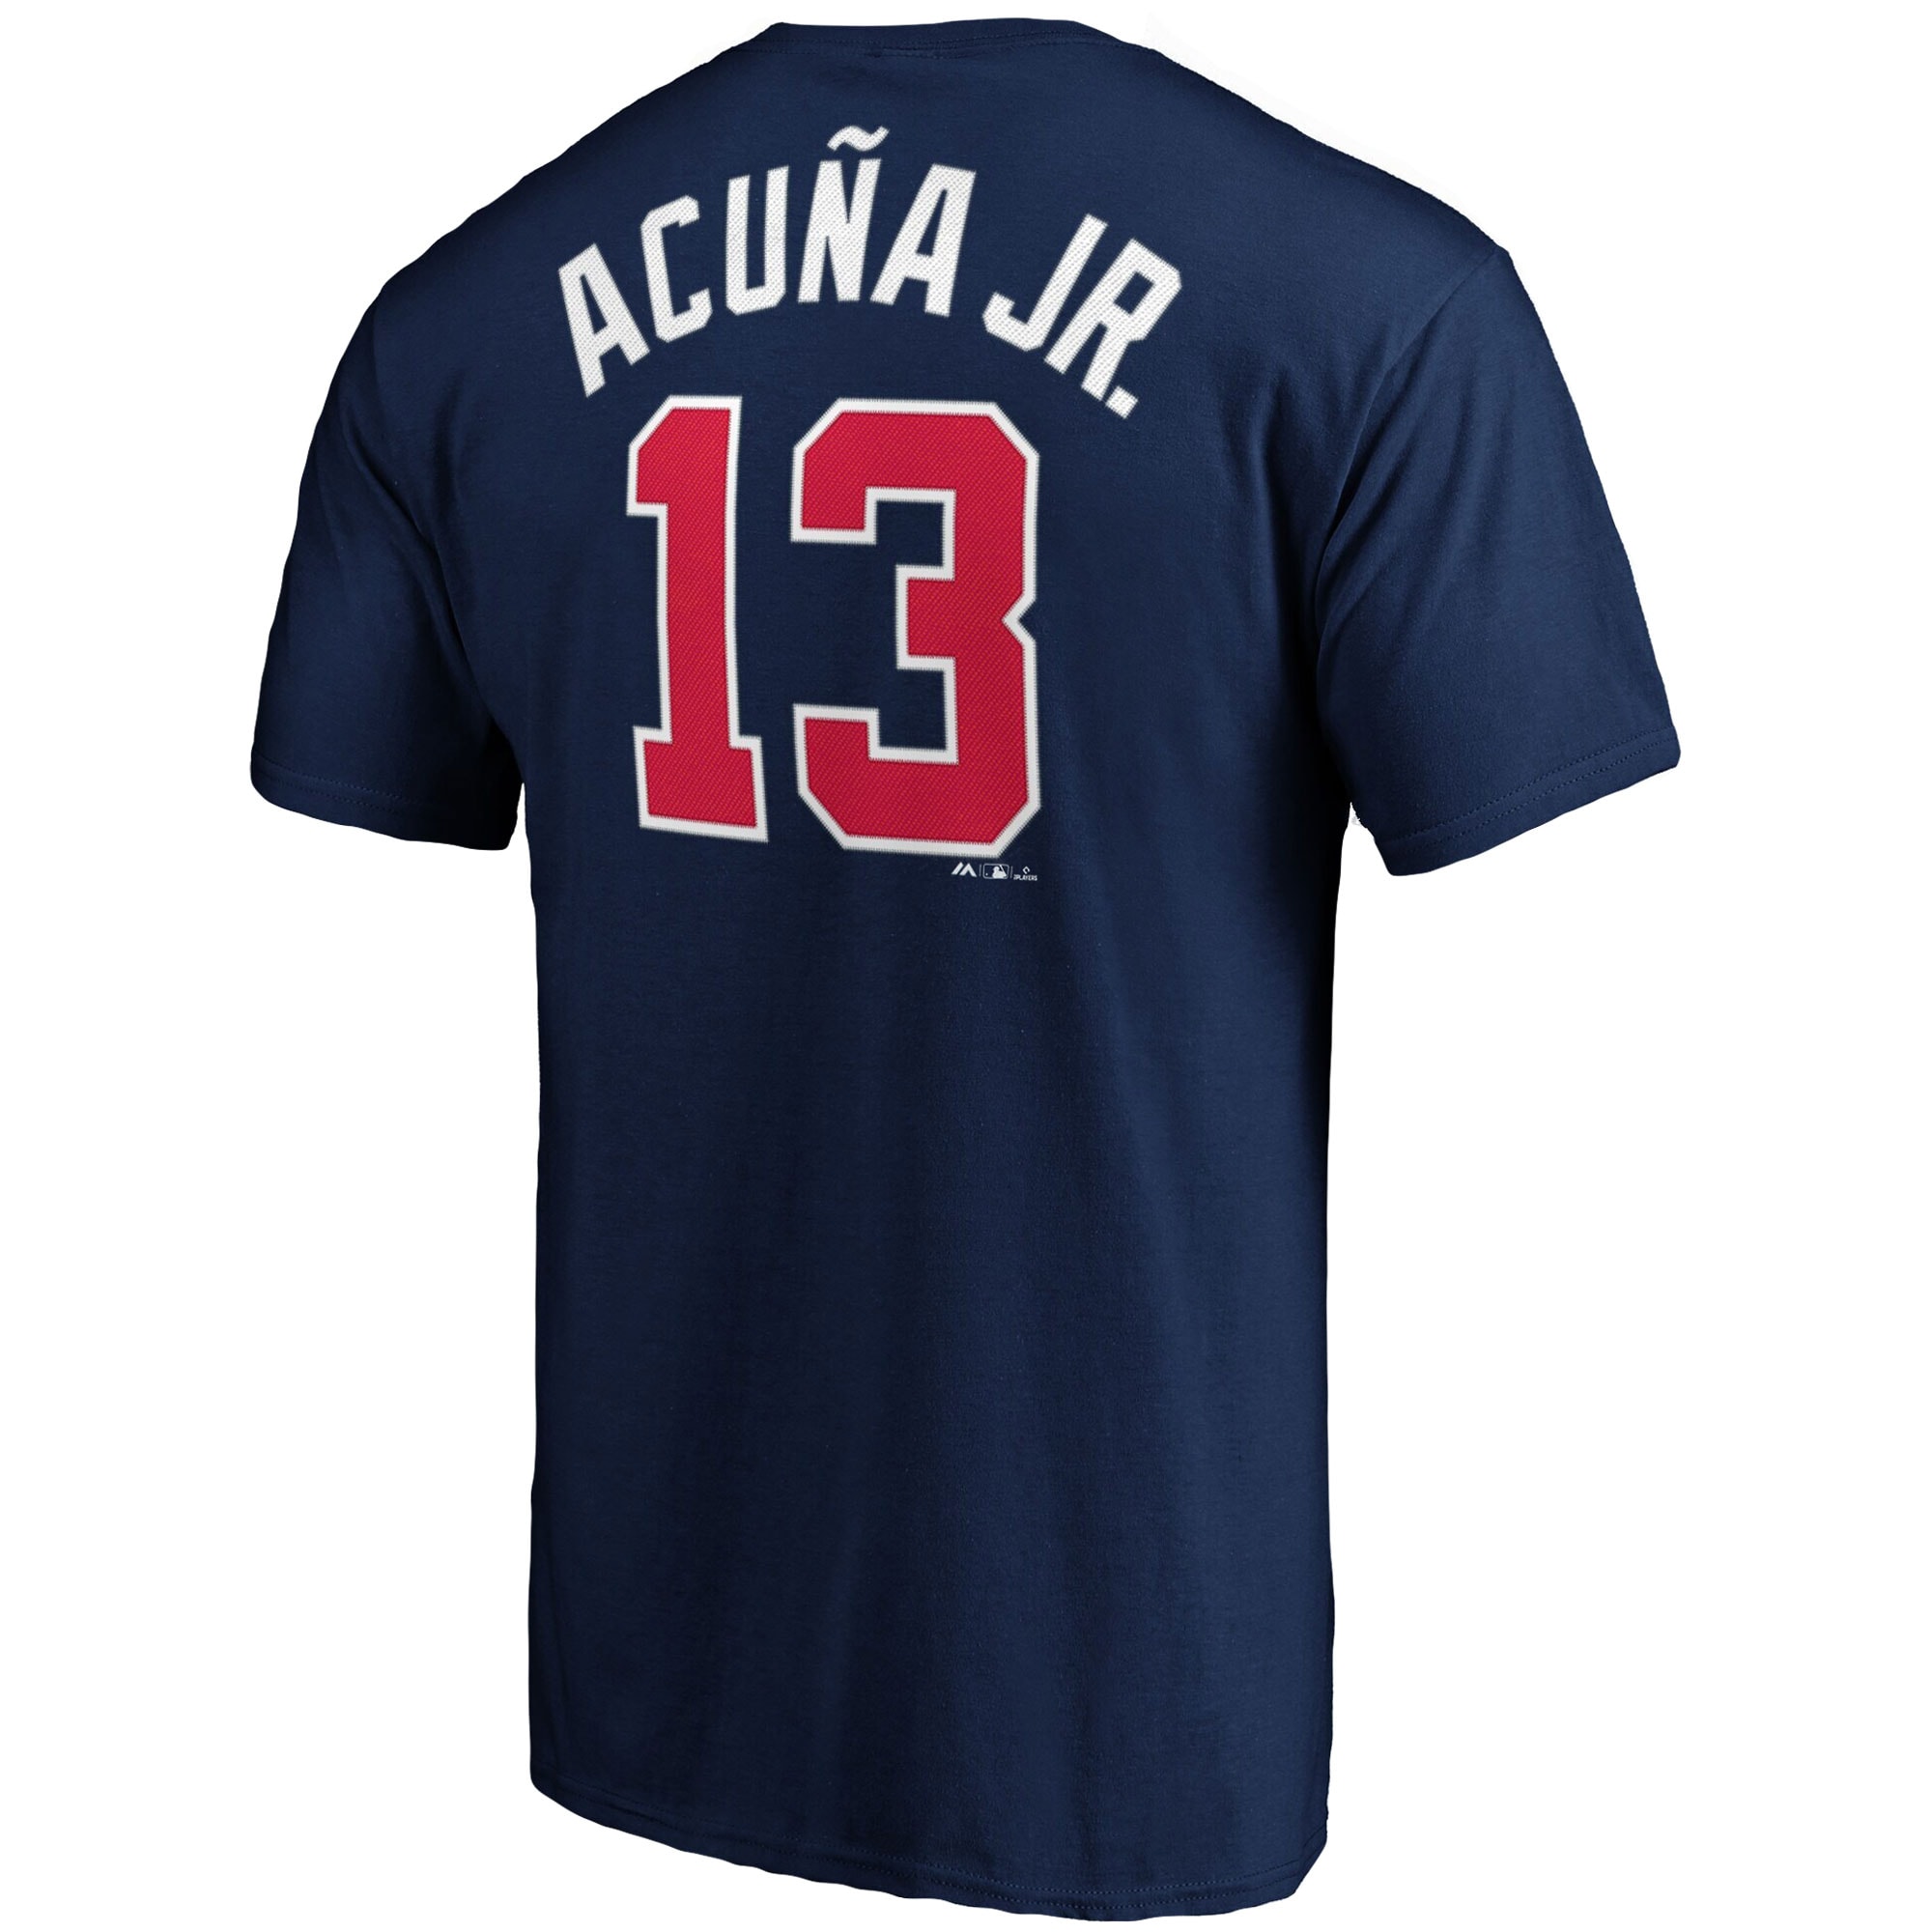 Atlanta Braves R Acuna Jr - MLB Player Men's Short Sleeve Crew Neck T-Shirt - image 3 of 3